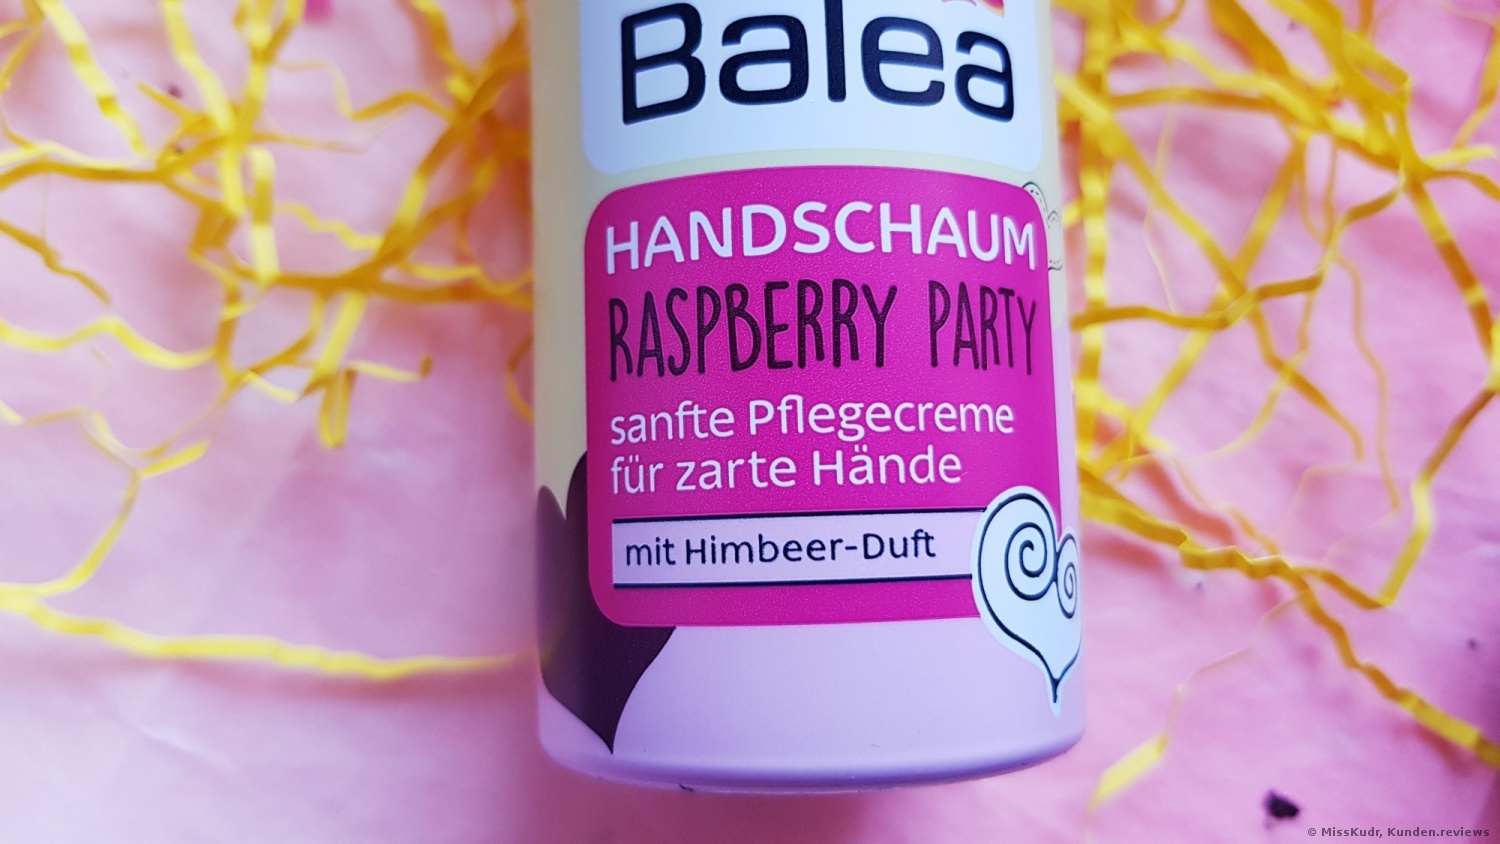 Balea Raspberry Party Handschaum